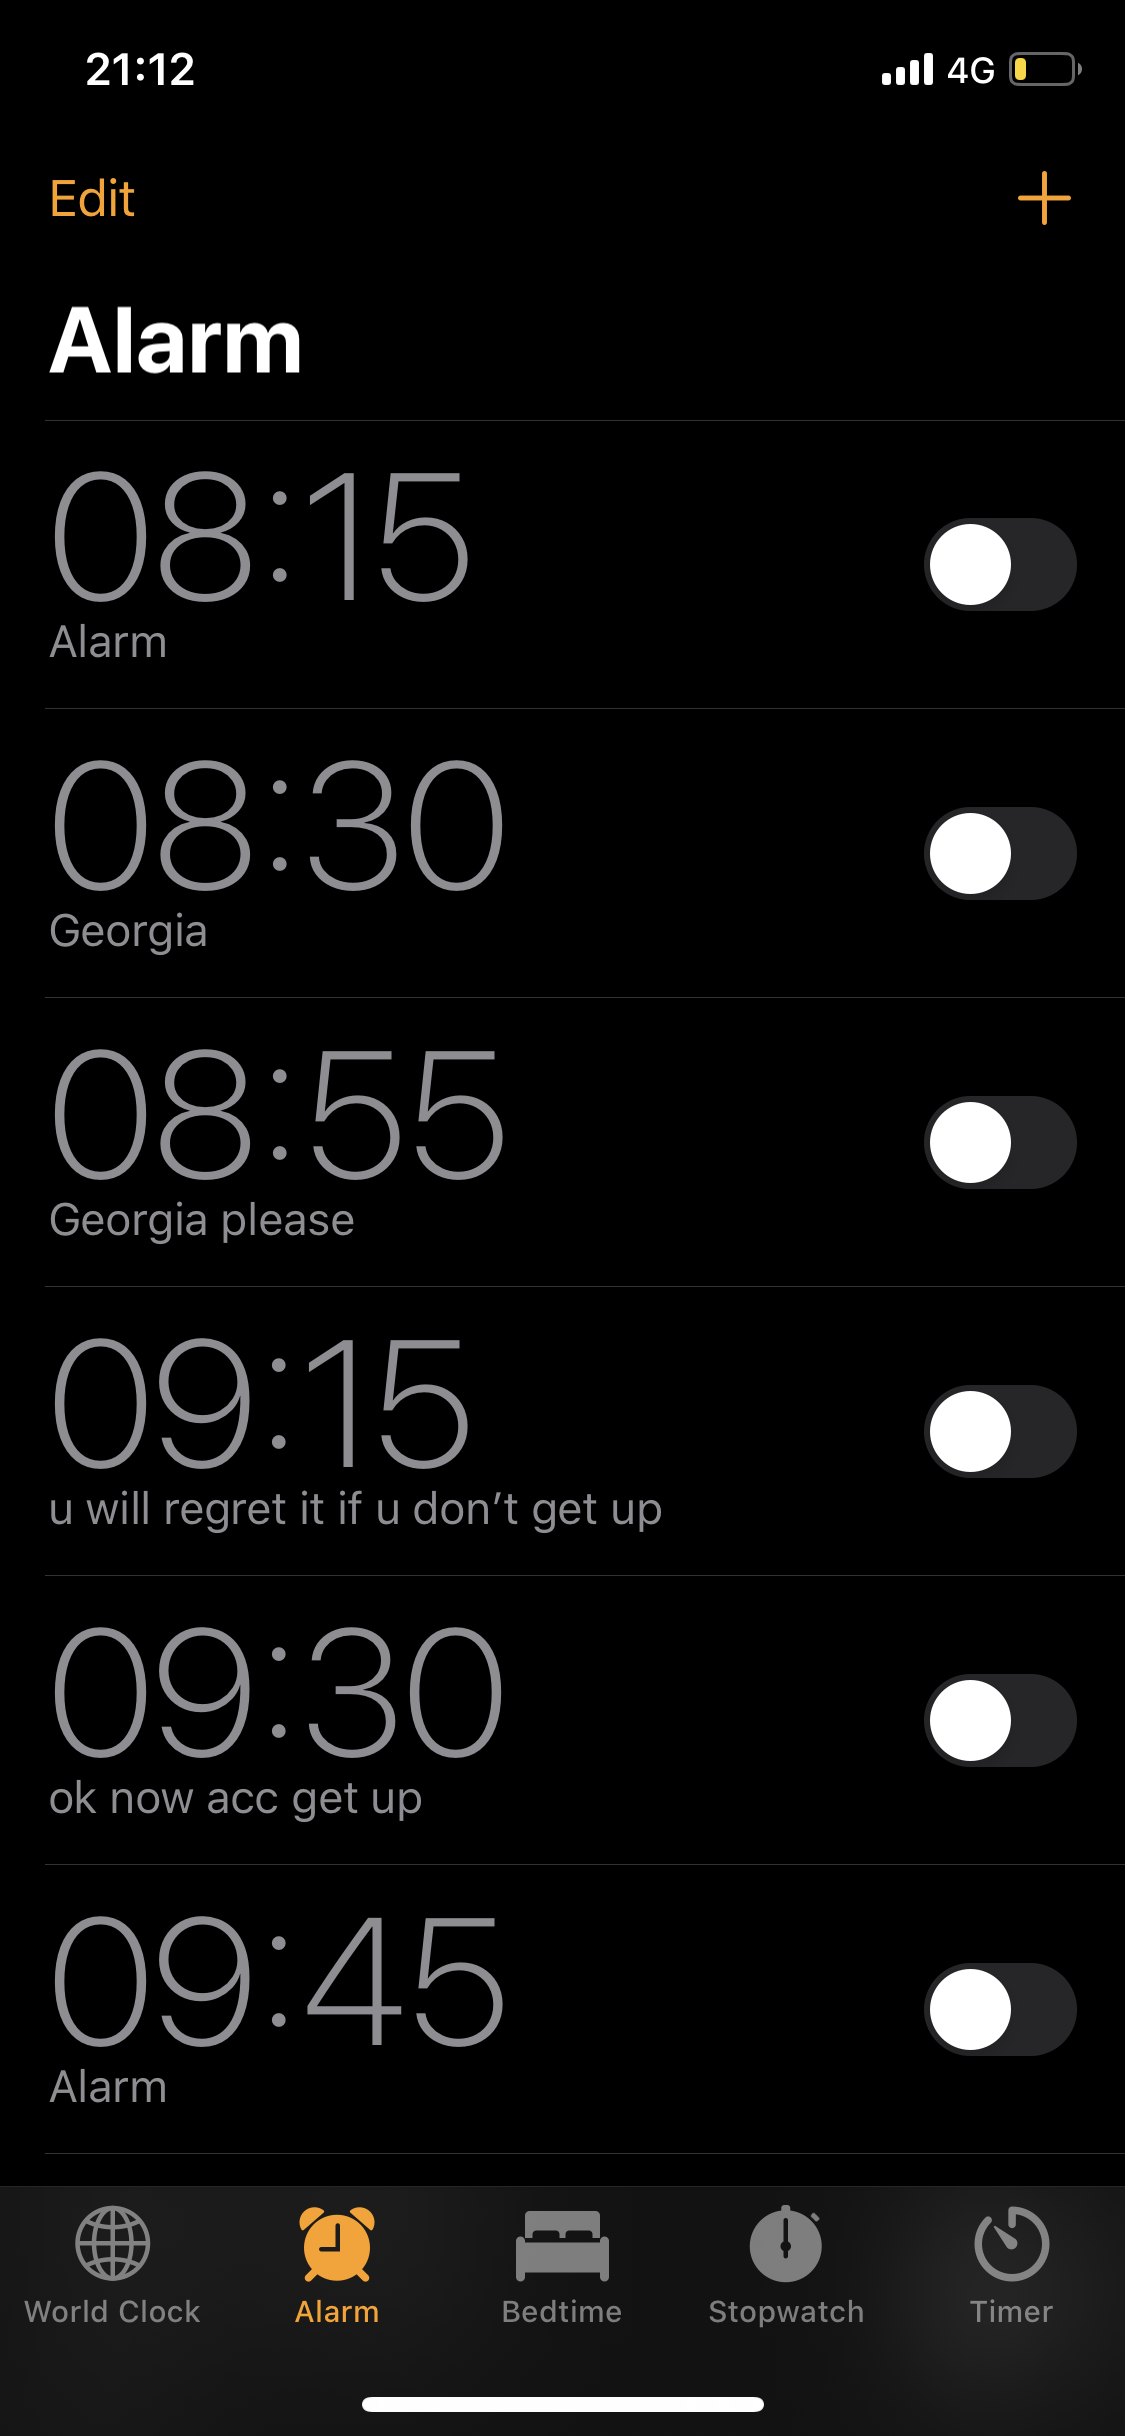 Many alarms set to wake someone up